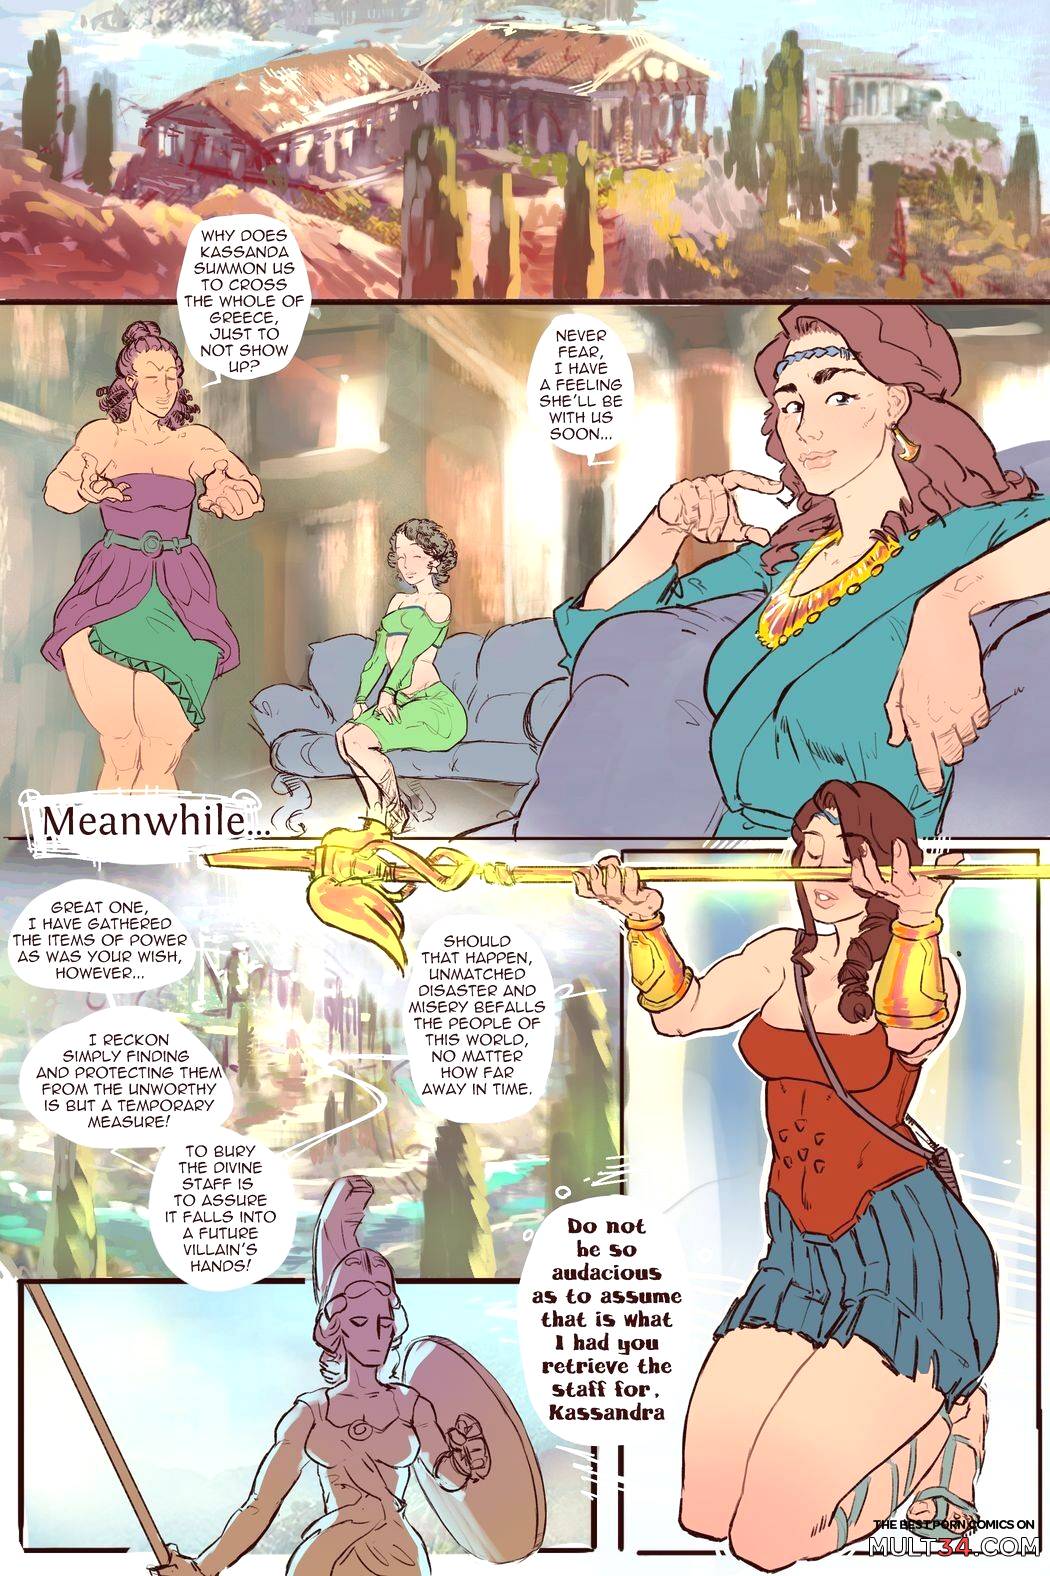 Kassandra's Gift porn comic - the best cartoon porn comics, Rule 34 | MULT34